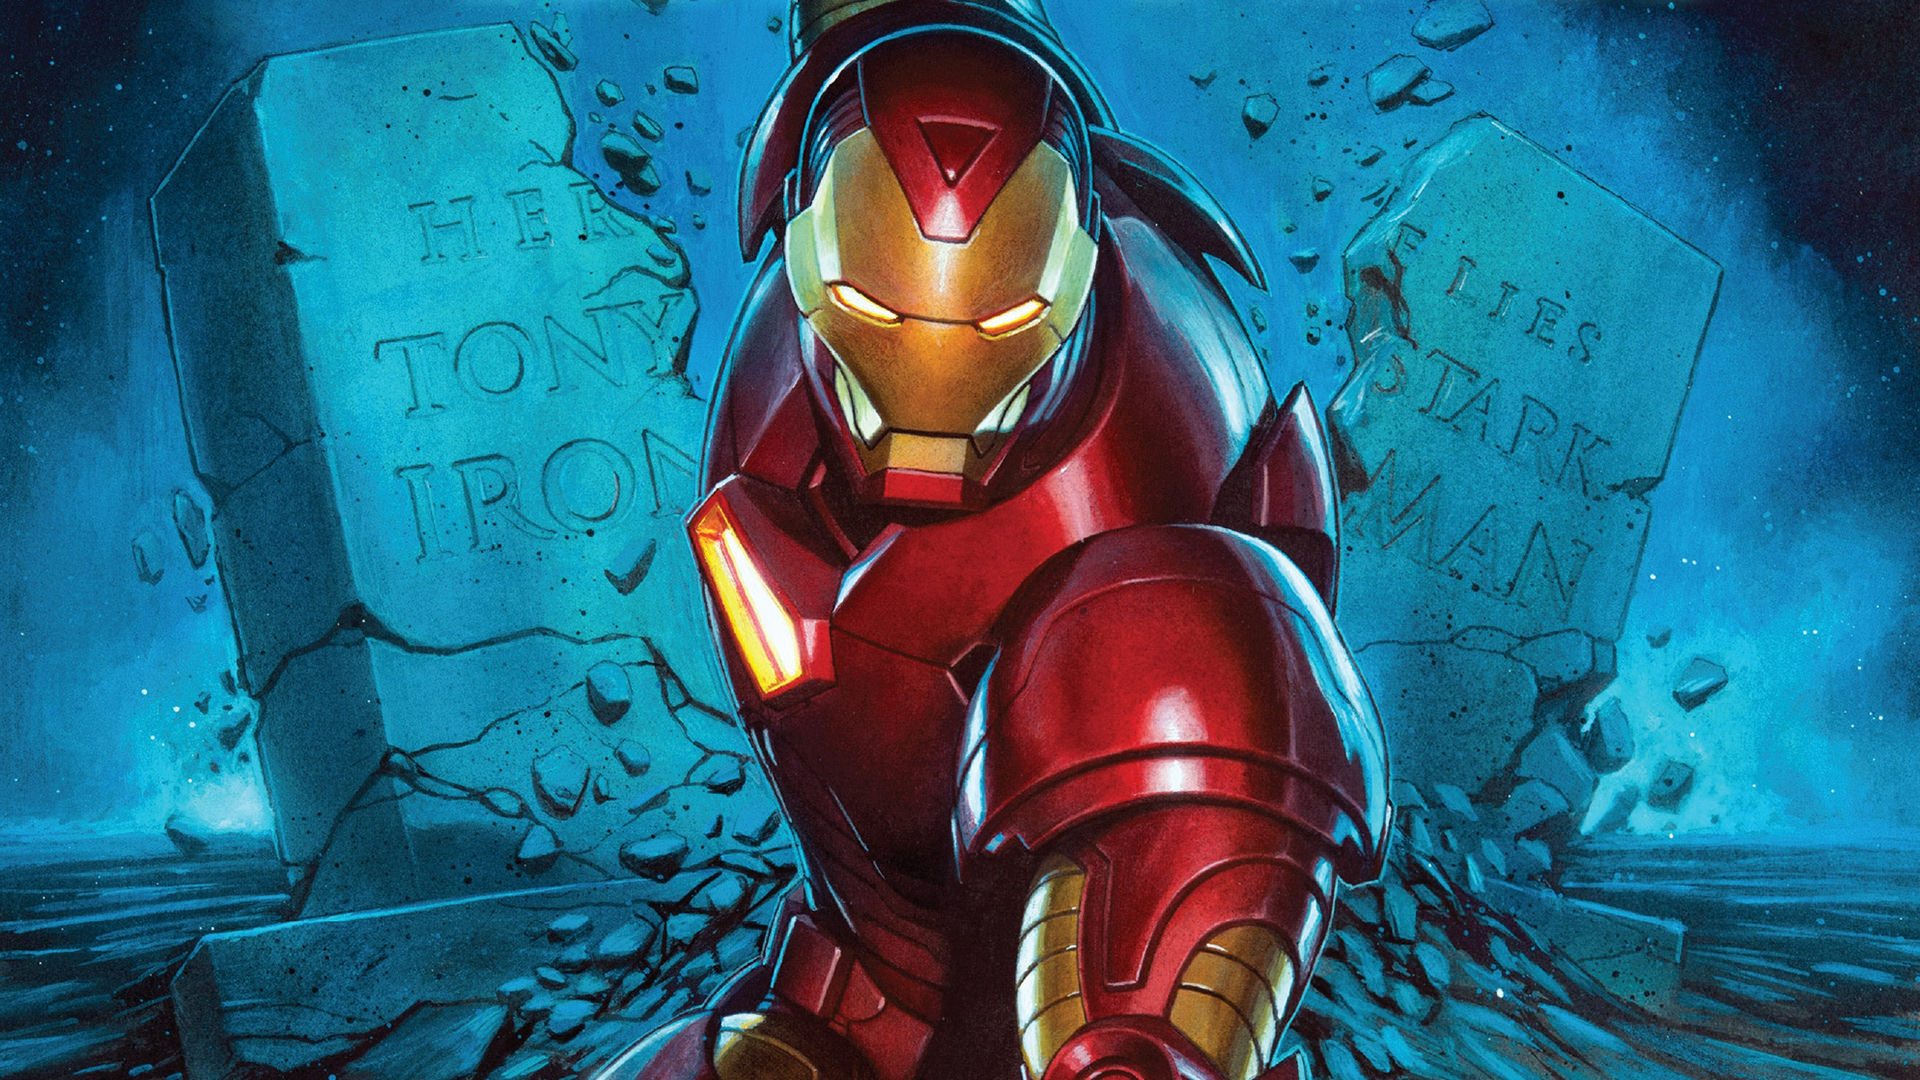 Download Iron Man Superhero Comics 19x10 Wallpaper 16 10 Widescreen 19x10 Hd Image Background 905